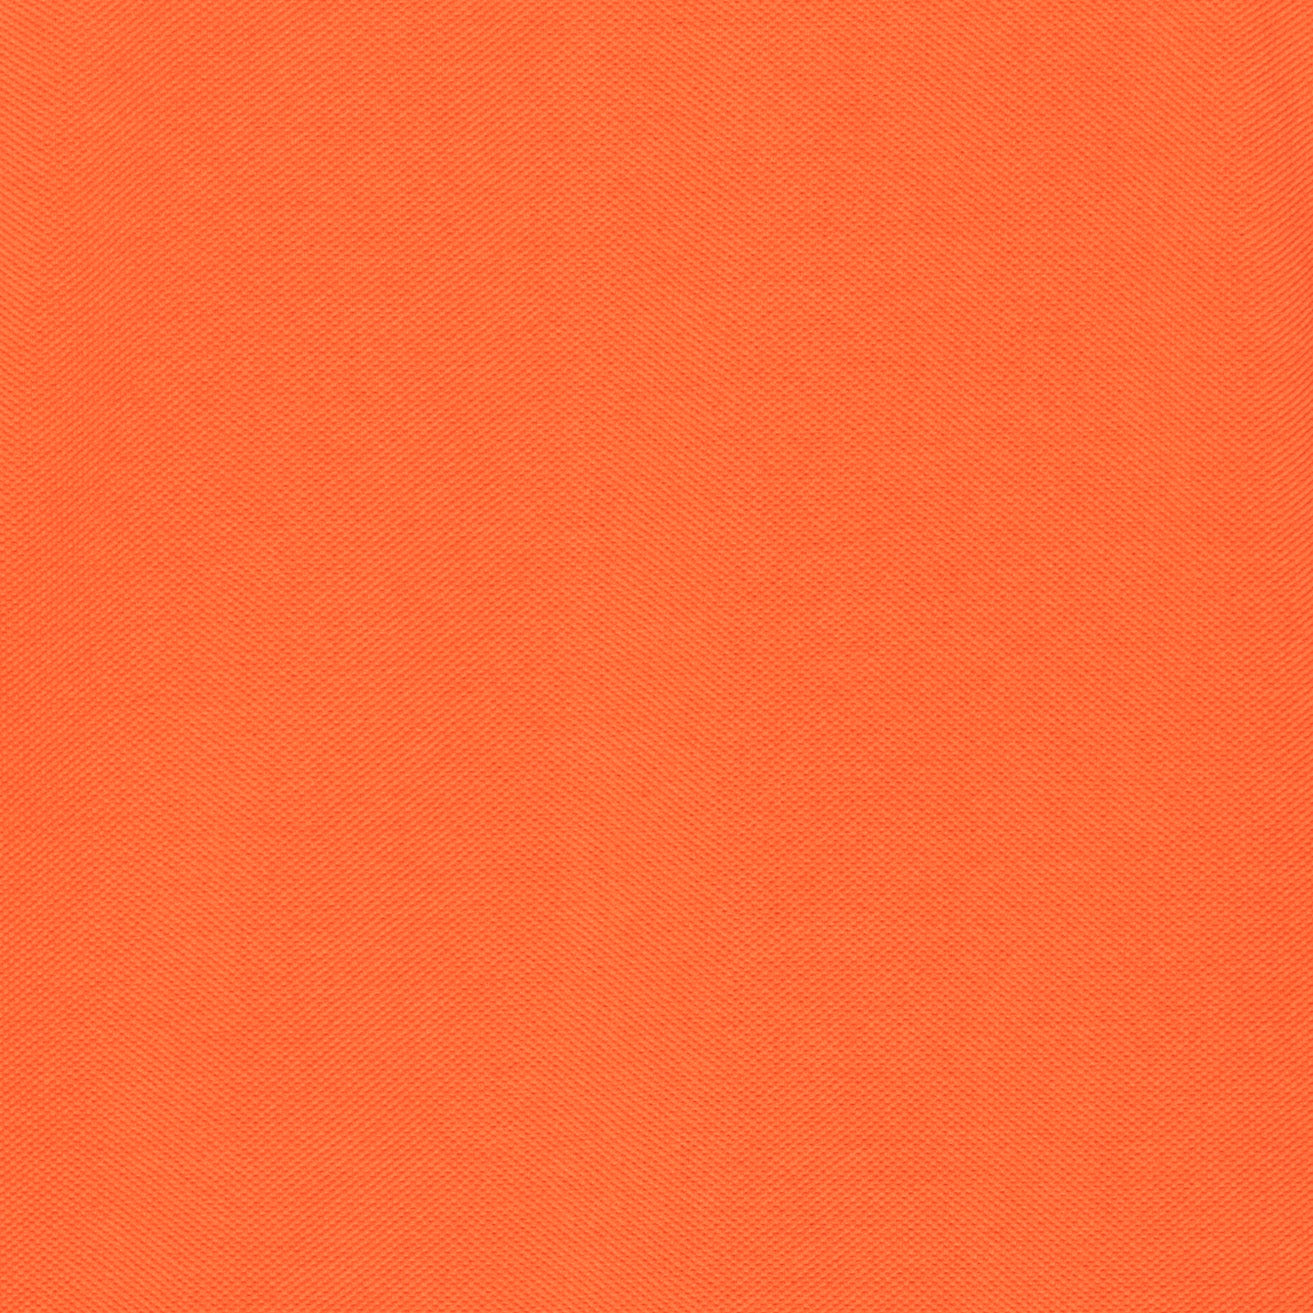 FEDELI 34 LAB "Pard" Orange Cotton Pique Long Sleeve Polo Shirt 50 NEW US FEDELI